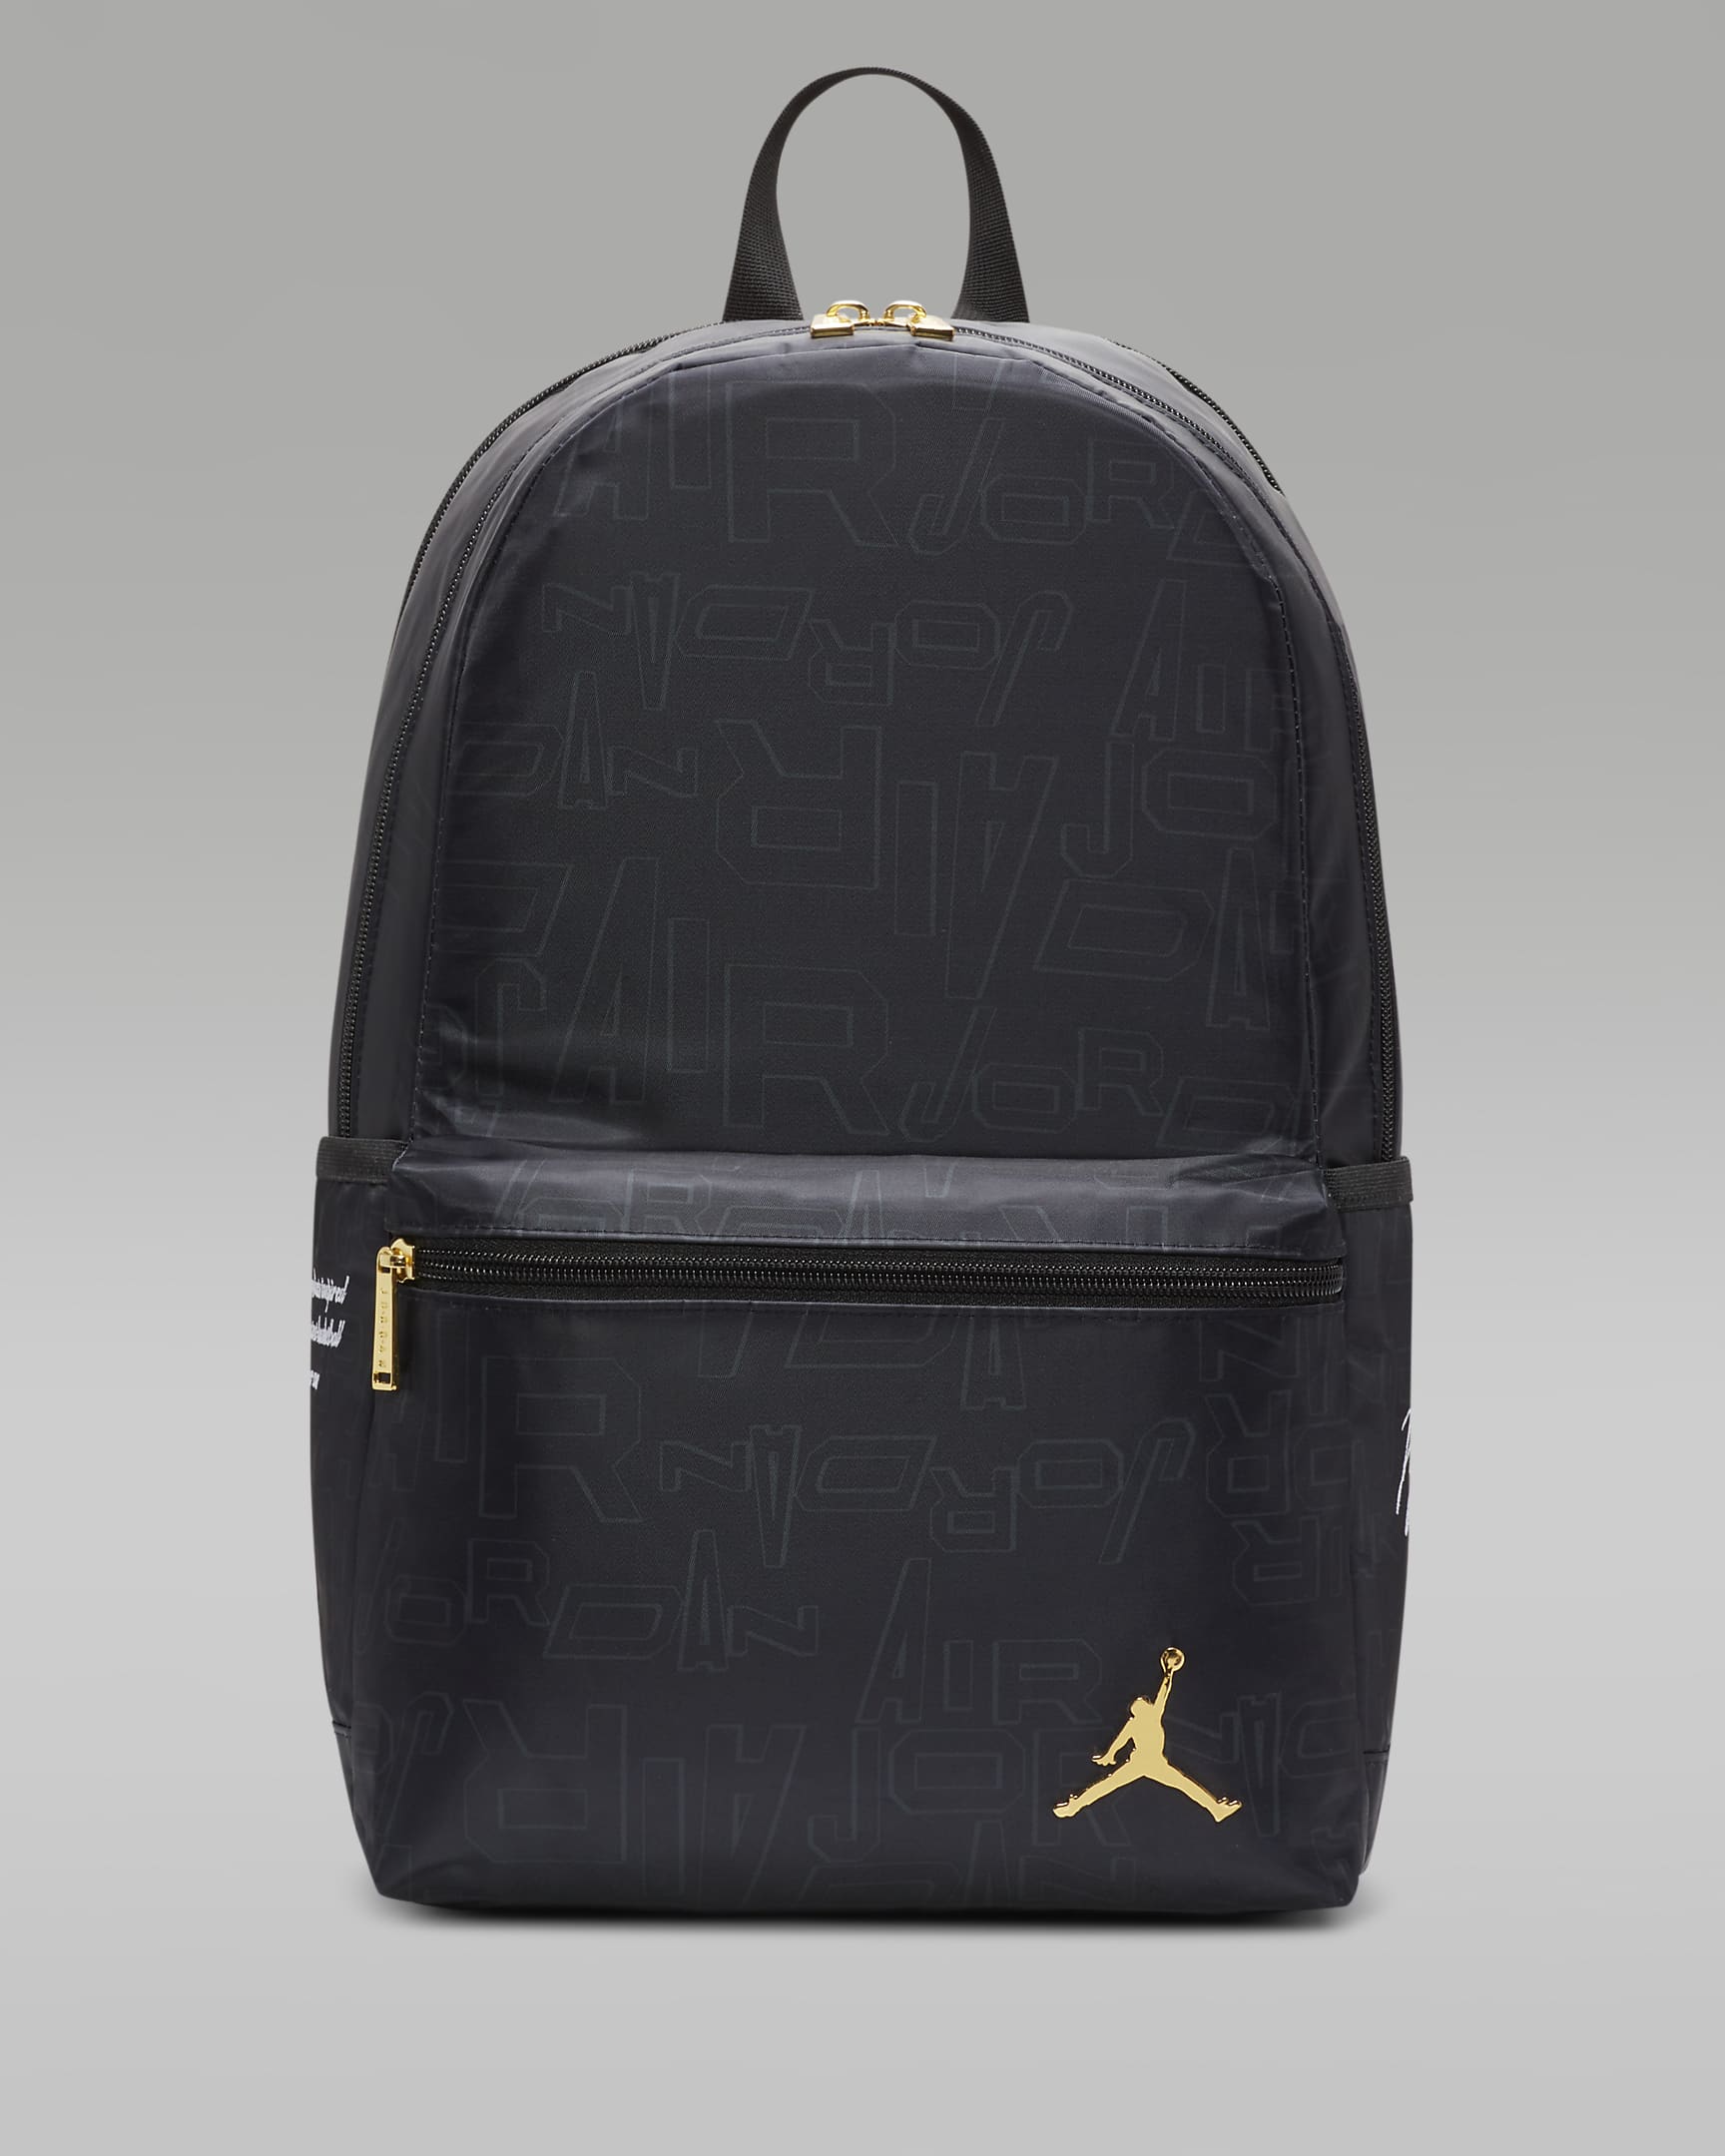 Jordan Black and Gold Backpack Backpack (19L). Nike IE